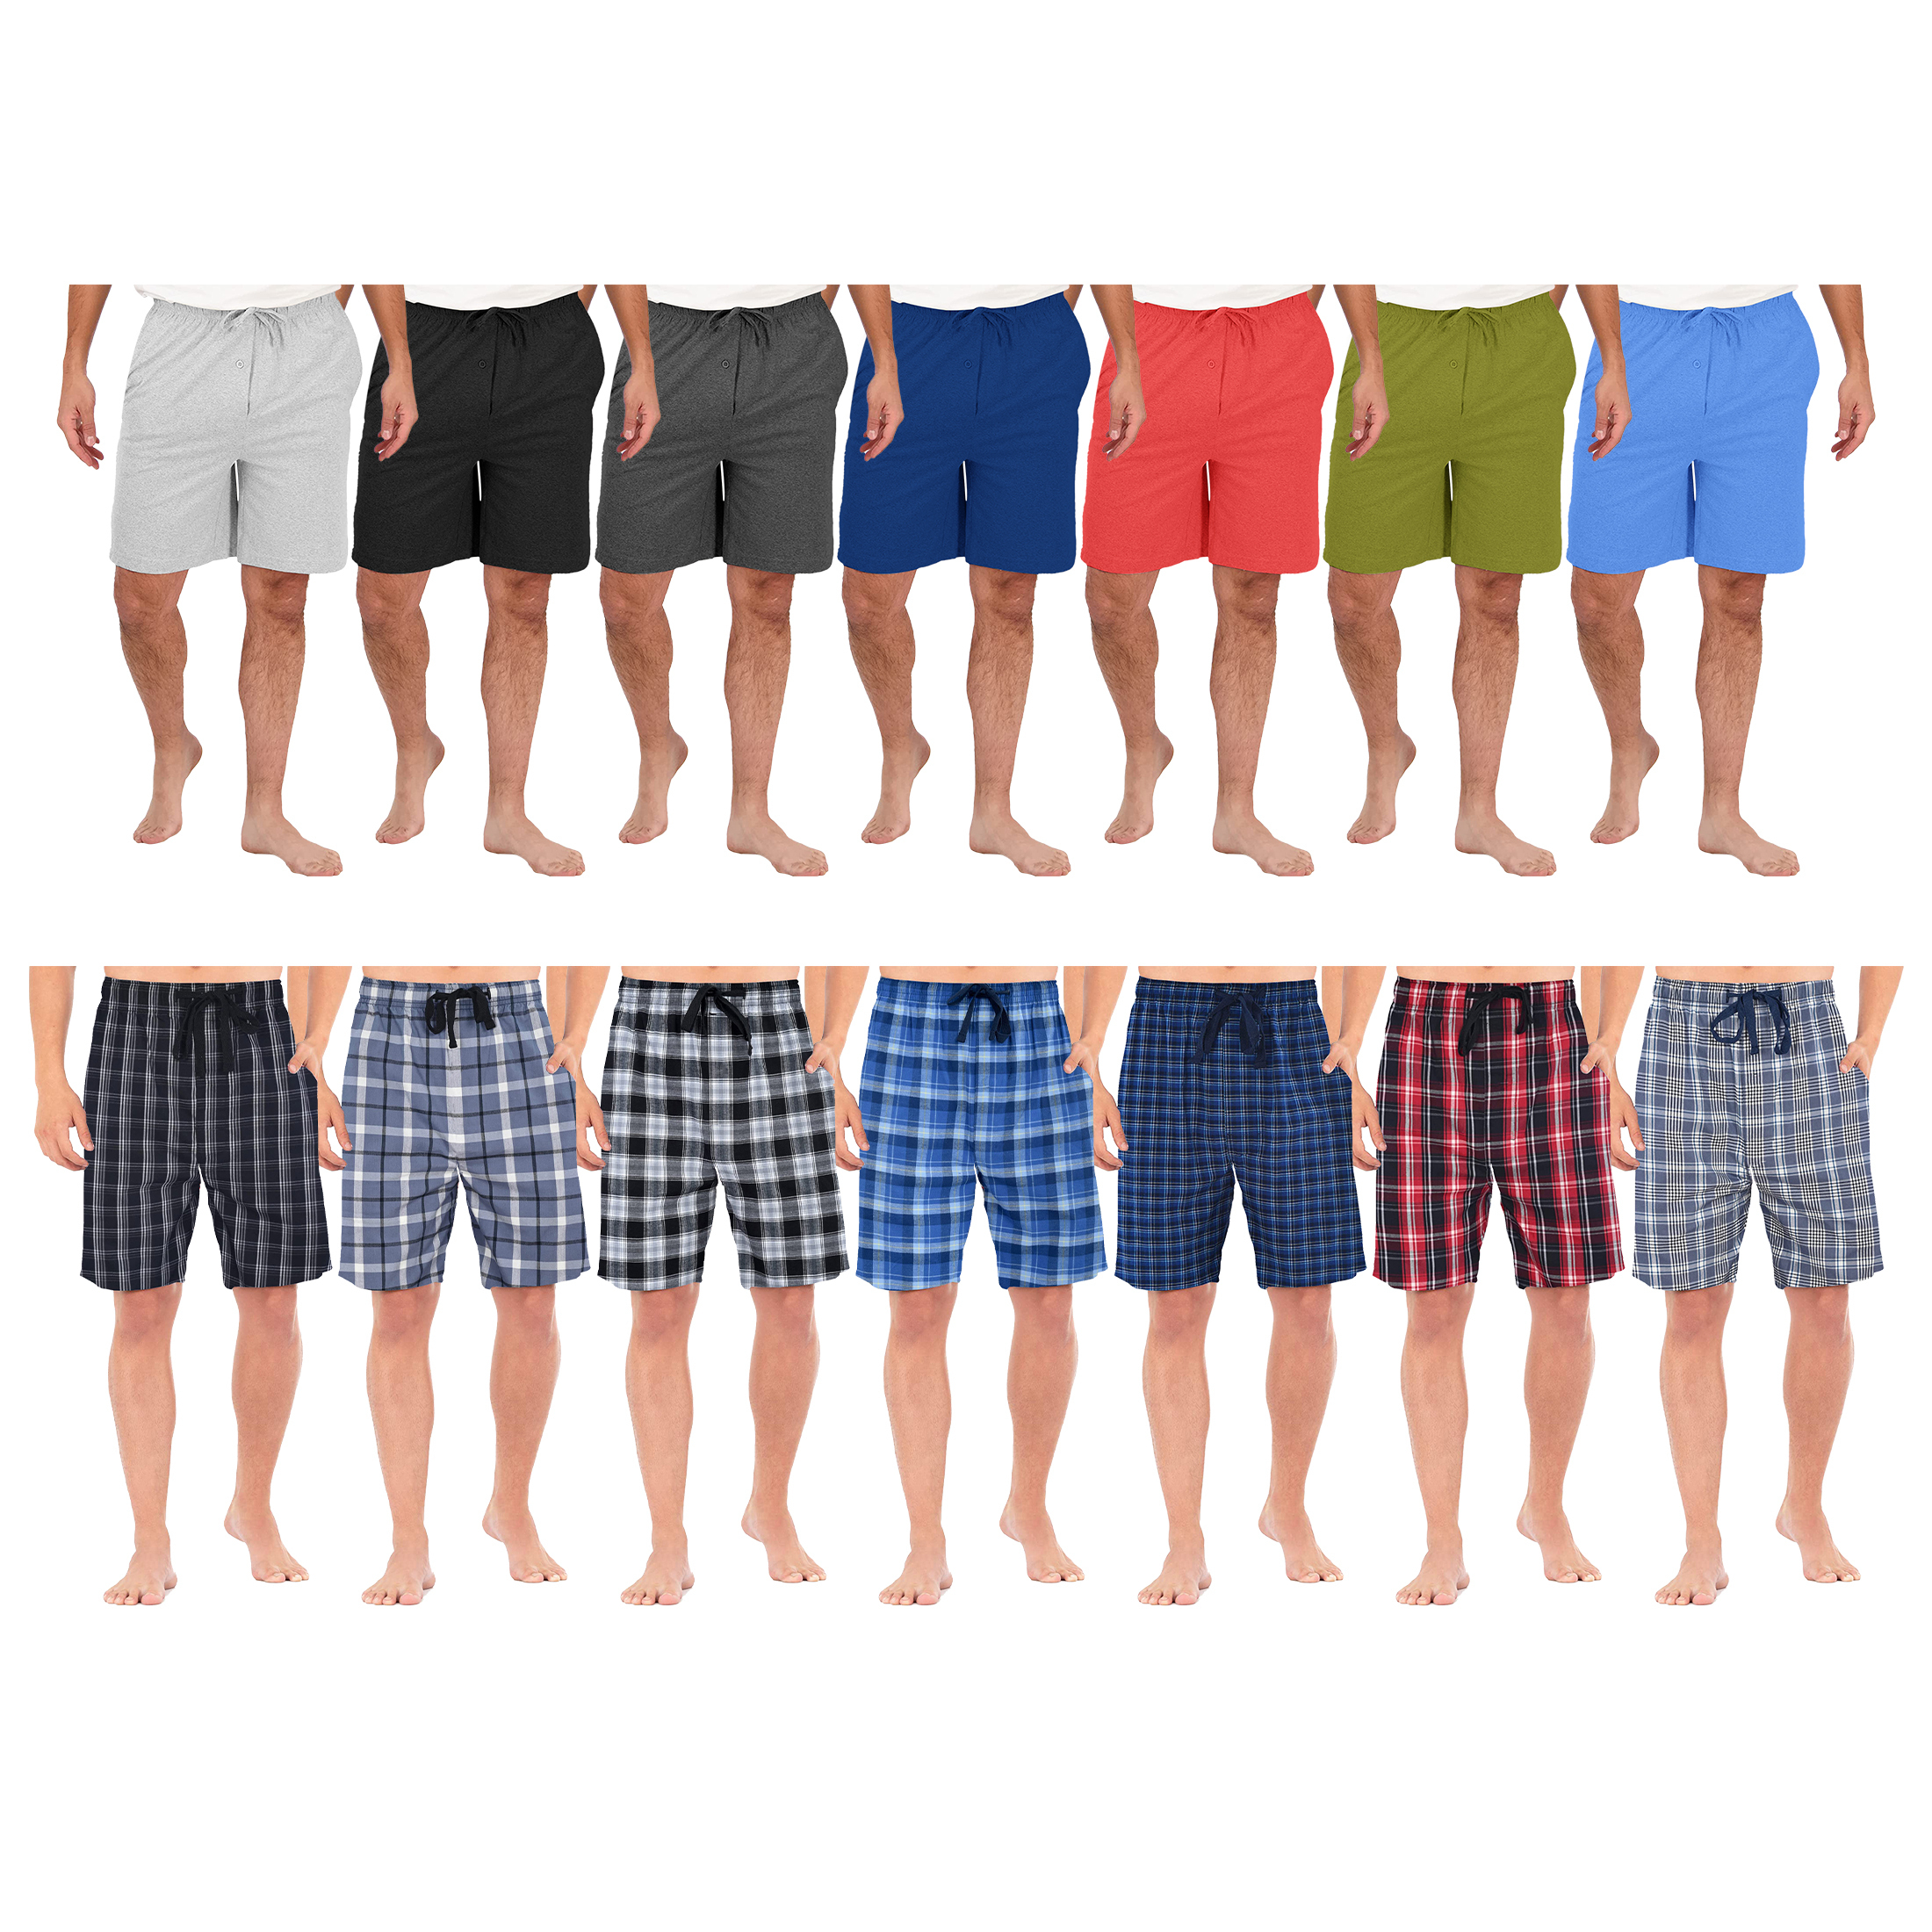 Multi-Pack: Men's Ultra-Soft Jersey Knit Sleep Lounge Pajama Shorts For Sleepwear - Plaid, 3 Pack, Medium